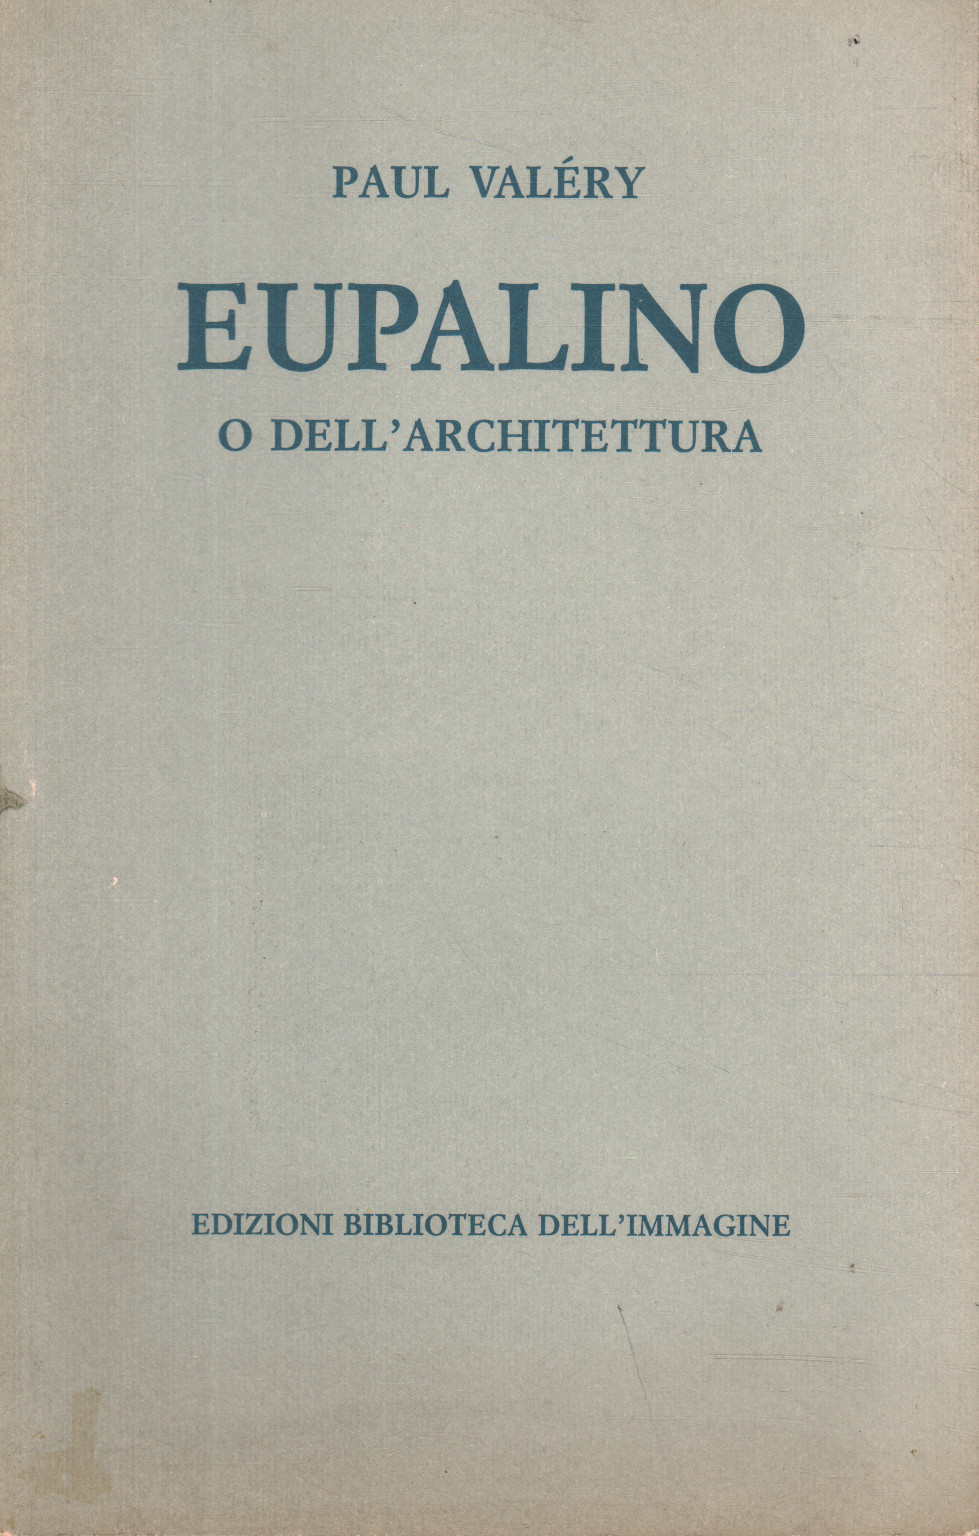 Eupaline ou Architecture